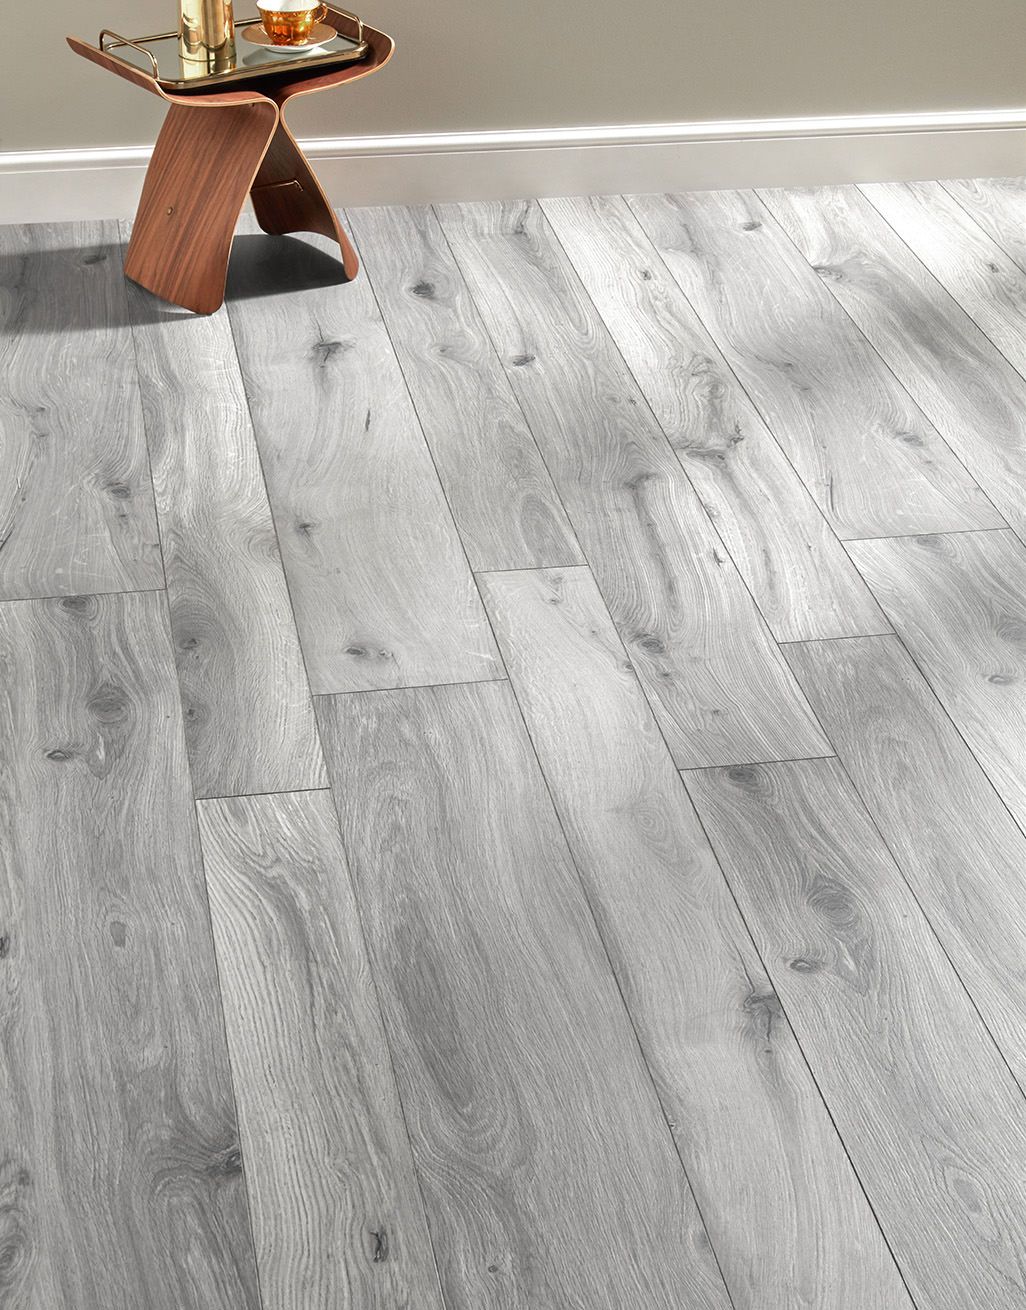 Coastal Grey Oak Laminate Flooring, Gray Laminate Wood Flooring Images